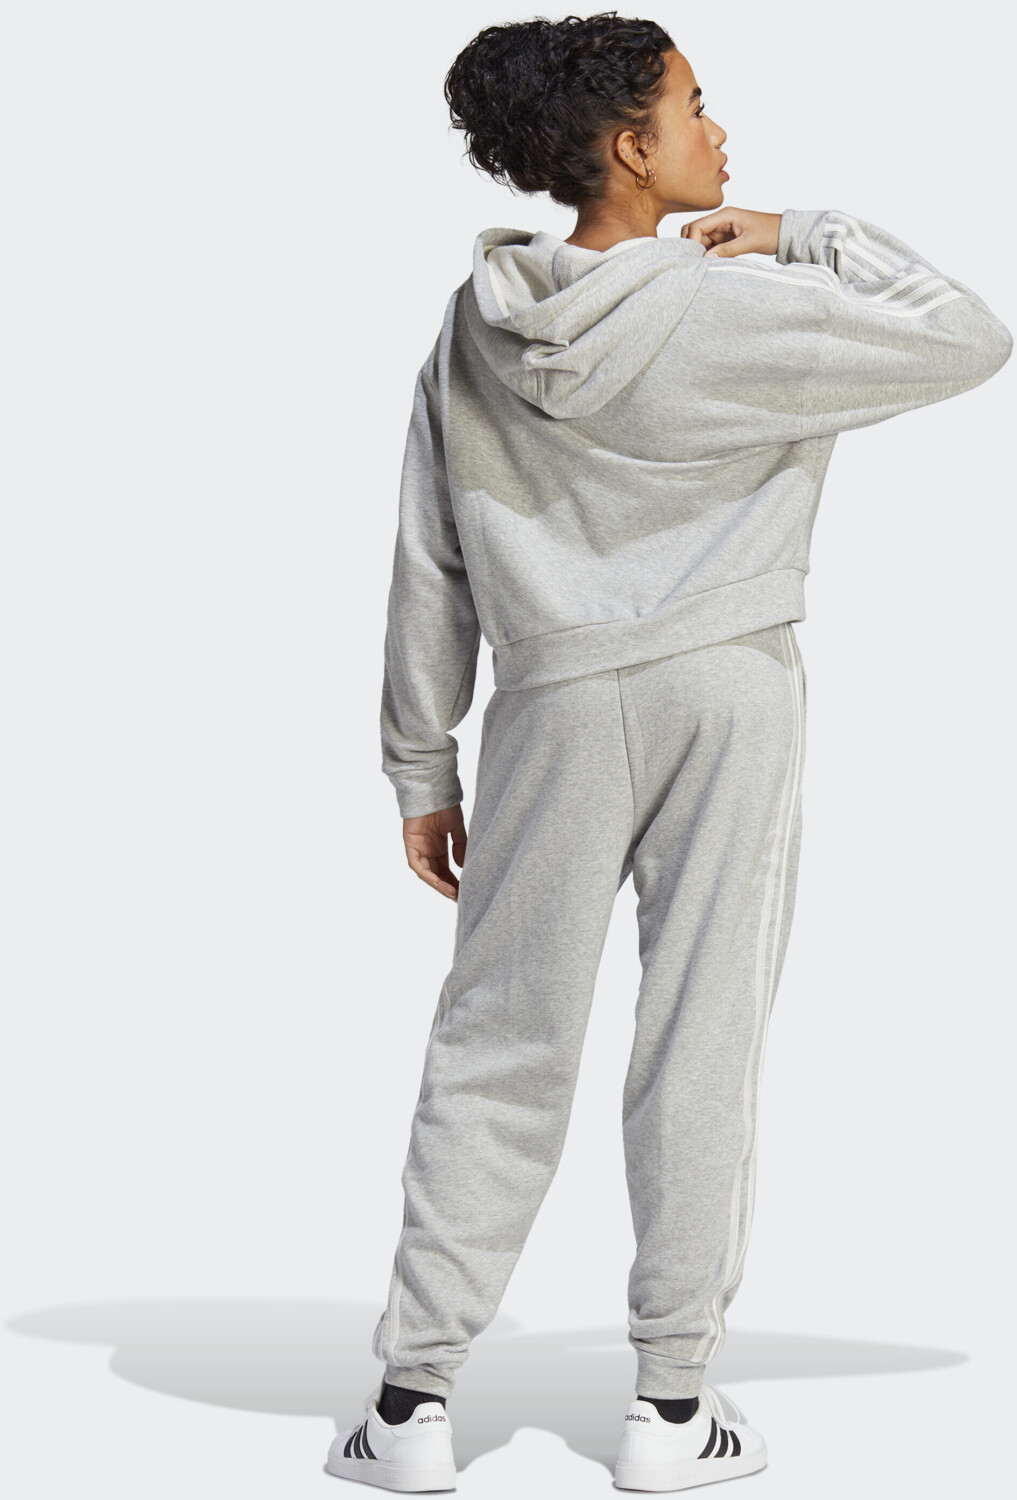 Adidas grey bei medium 59,95 € Energize heather | Trainingsanzug Preisvergleich ab